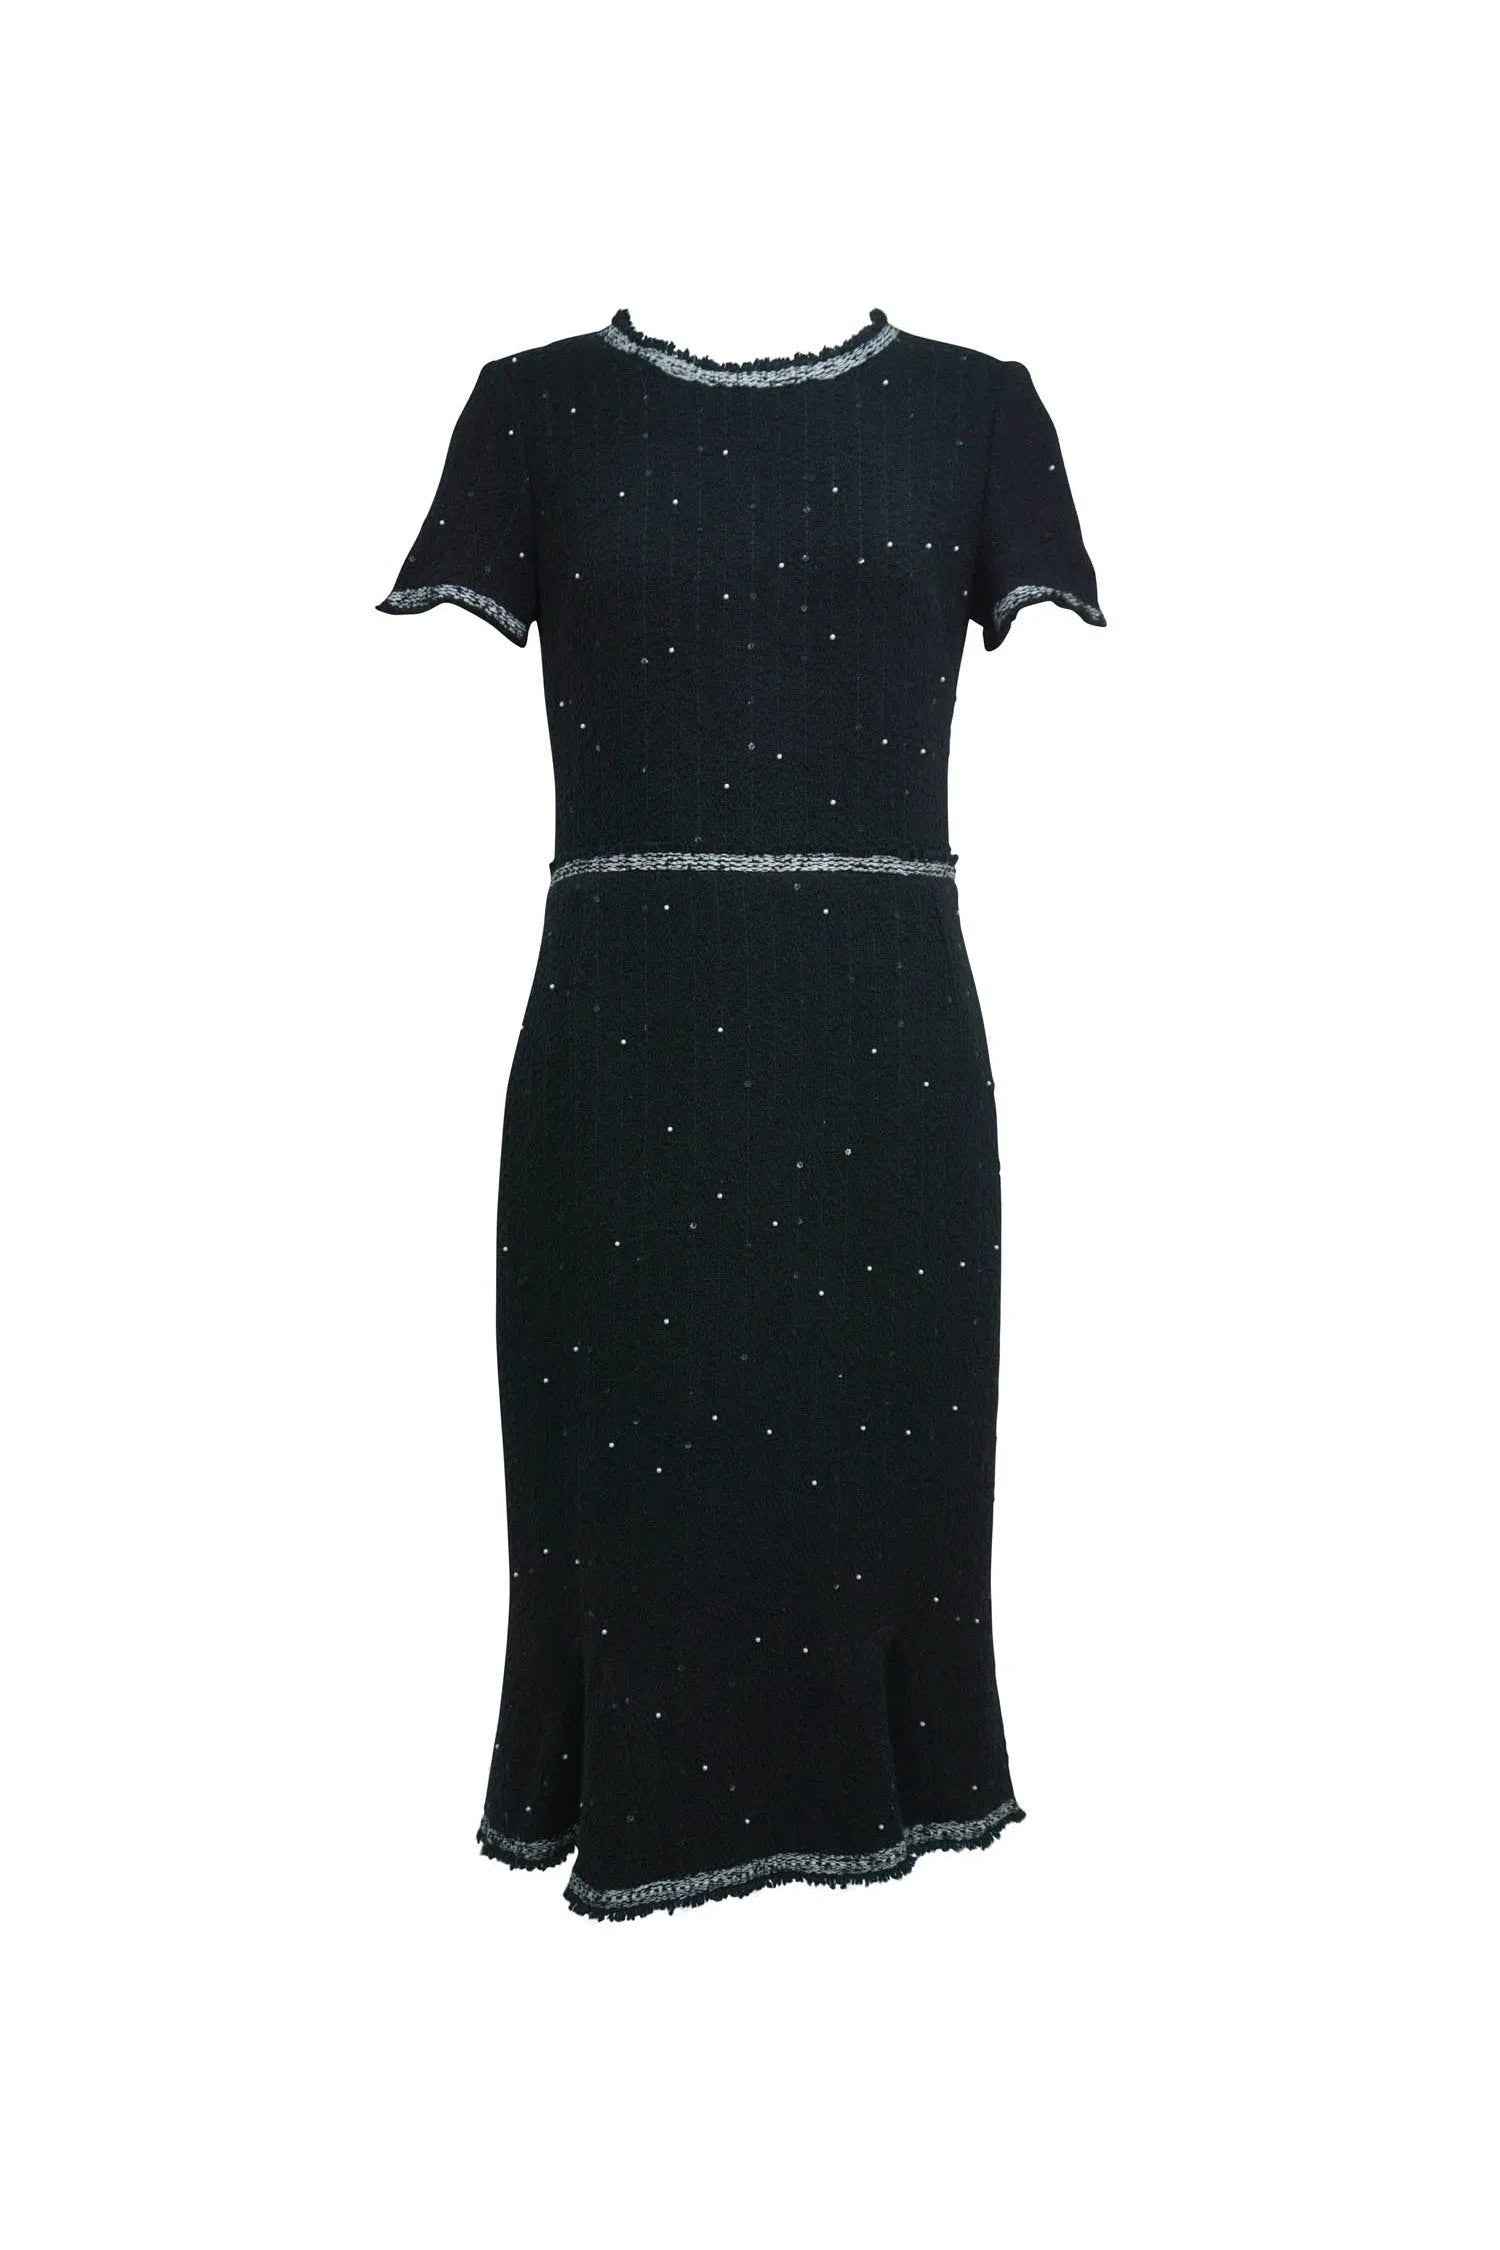 Oscar de la Renta Black Pearl and Sequins Embellished Cocktail Dress Sz 6 - Foxy Couture Carmel